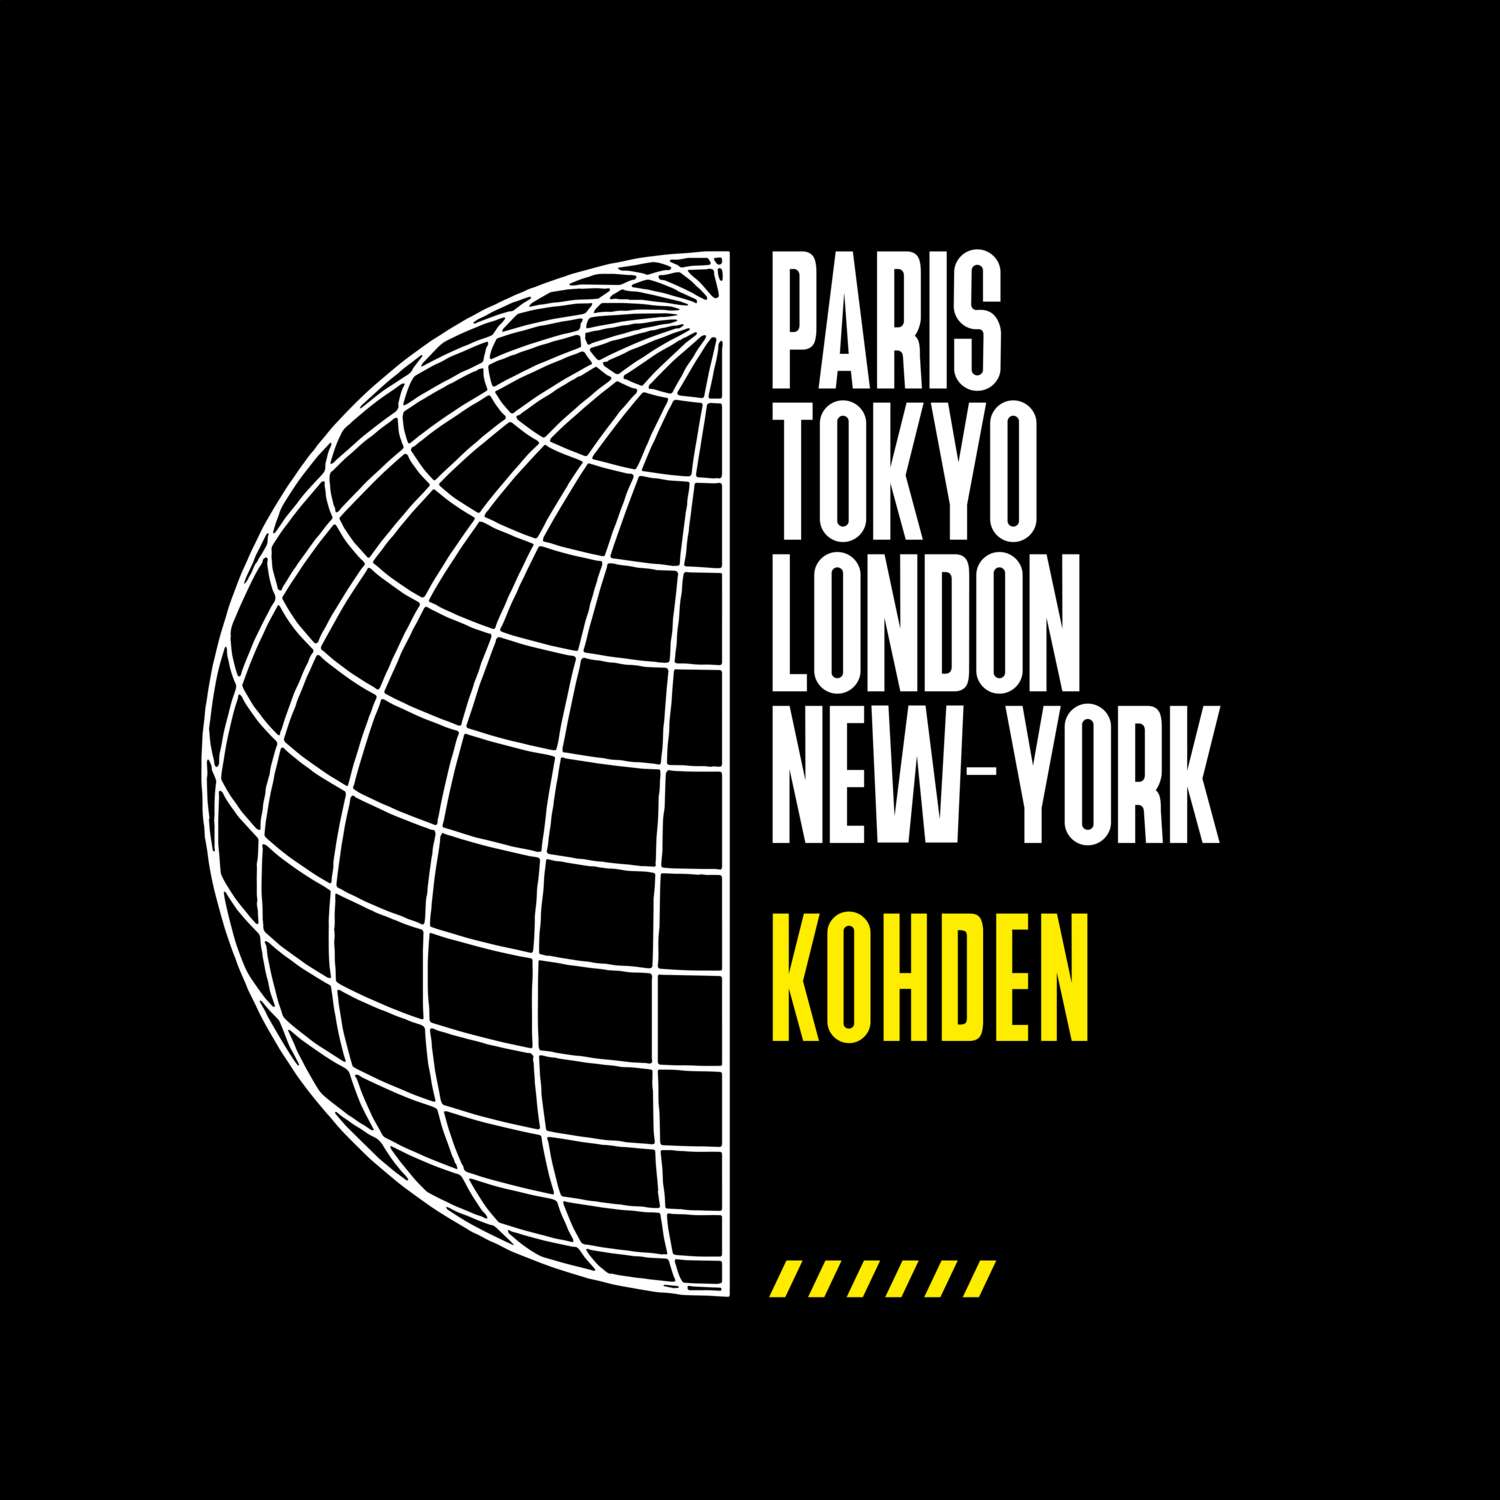 Kohden T-Shirt »Paris Tokyo London«